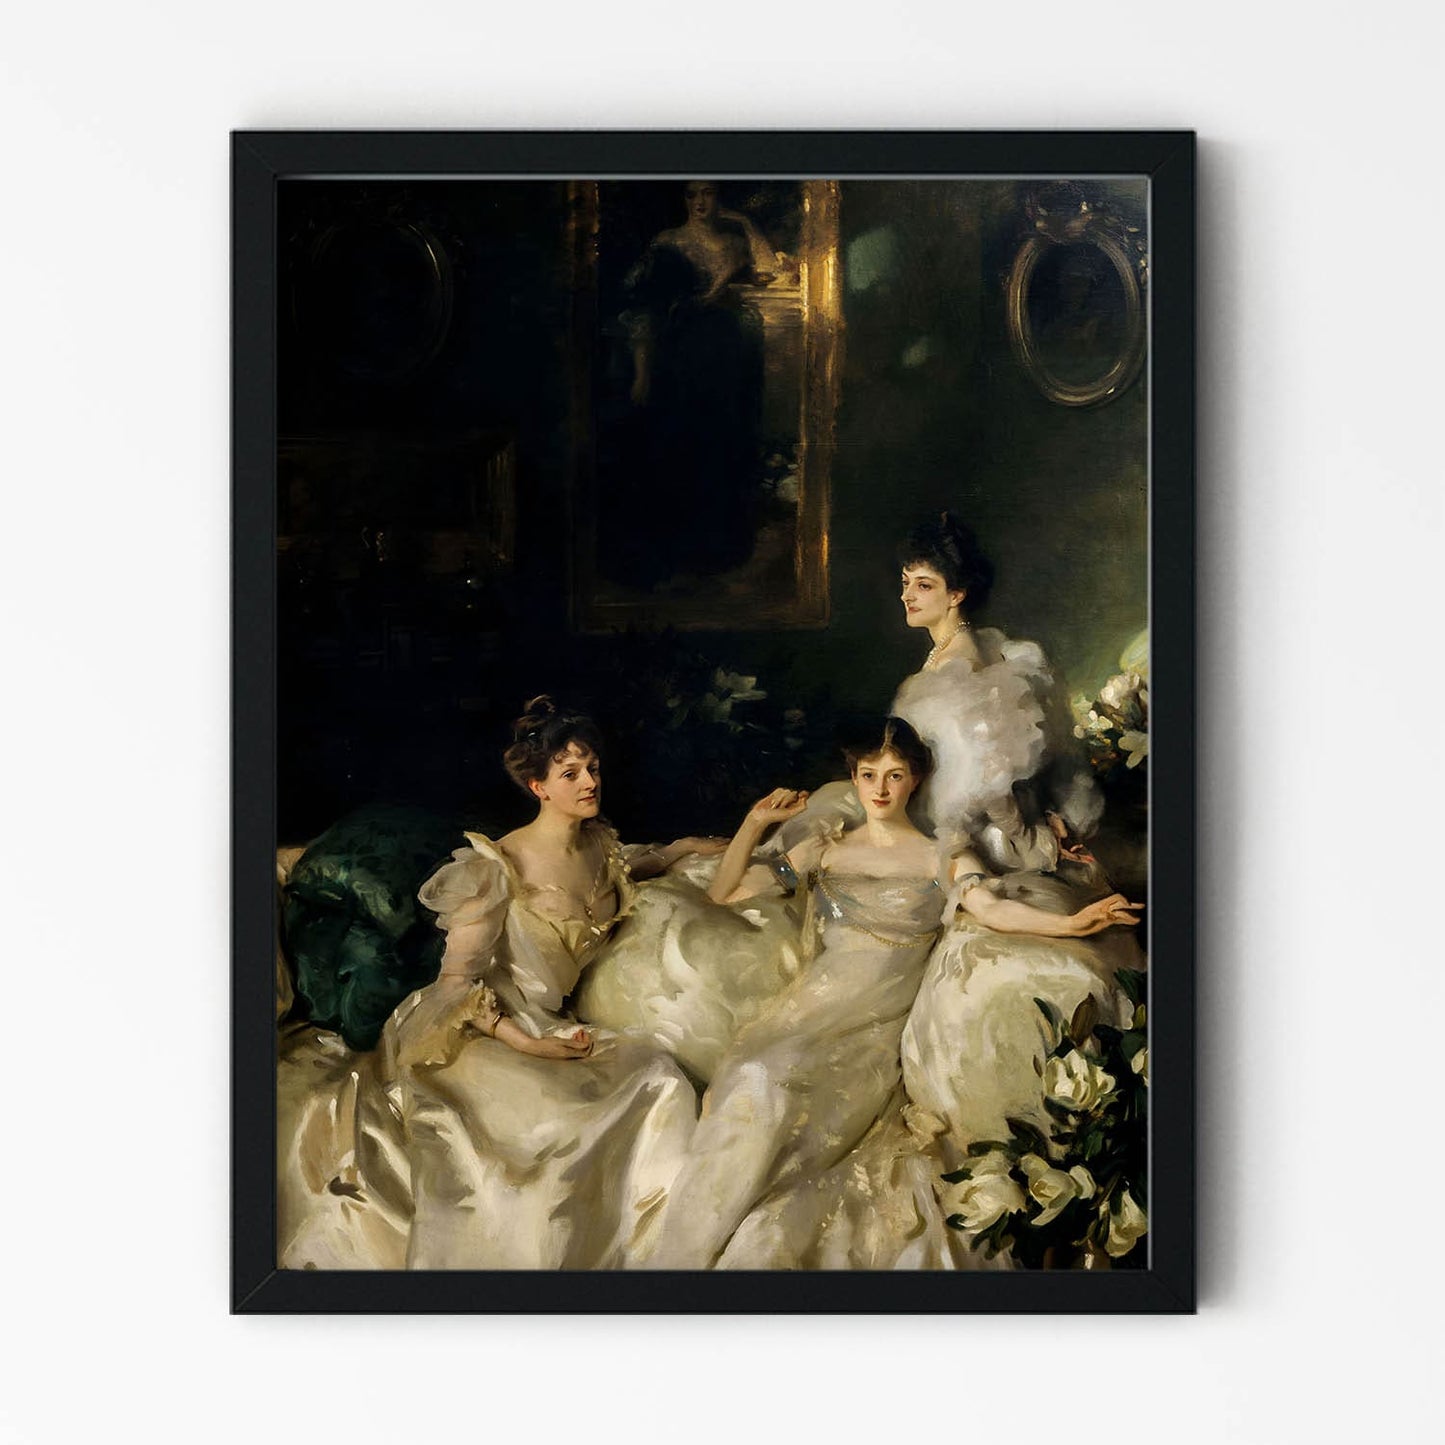 Victorian Era Aesthetic Art Print in Black Picture Frame